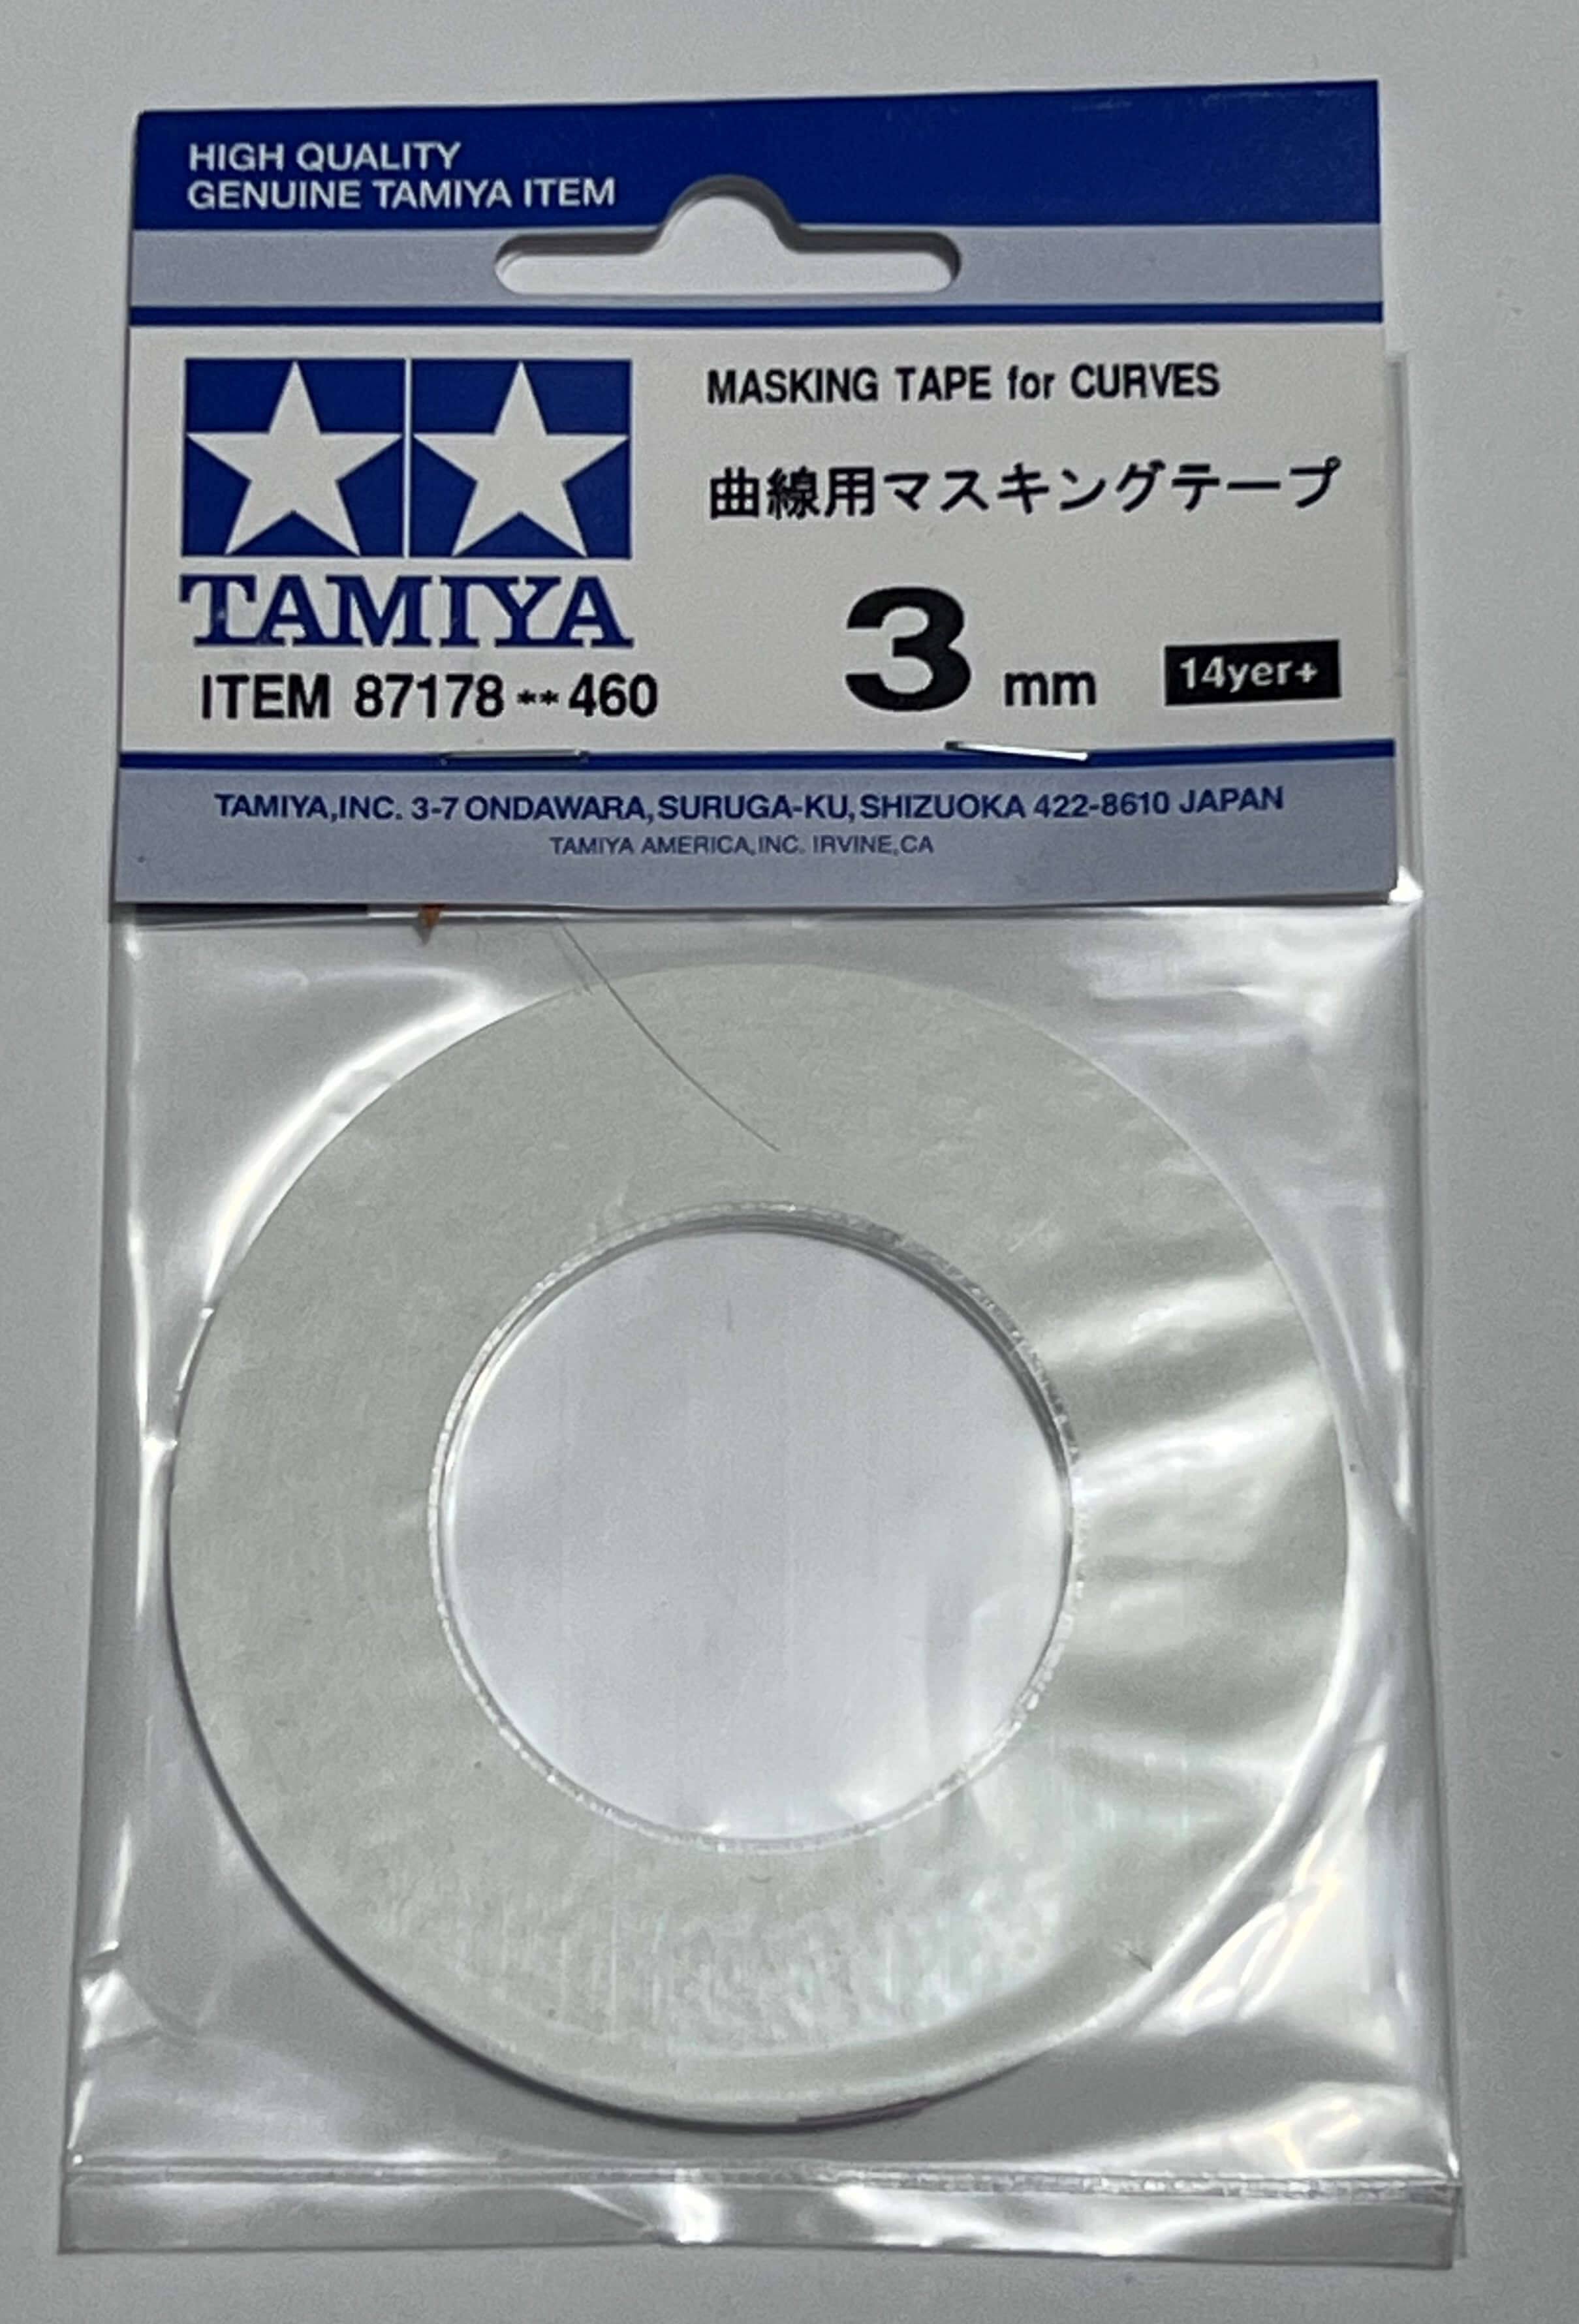 Tamiya - Masking Tape For Curves 3mm